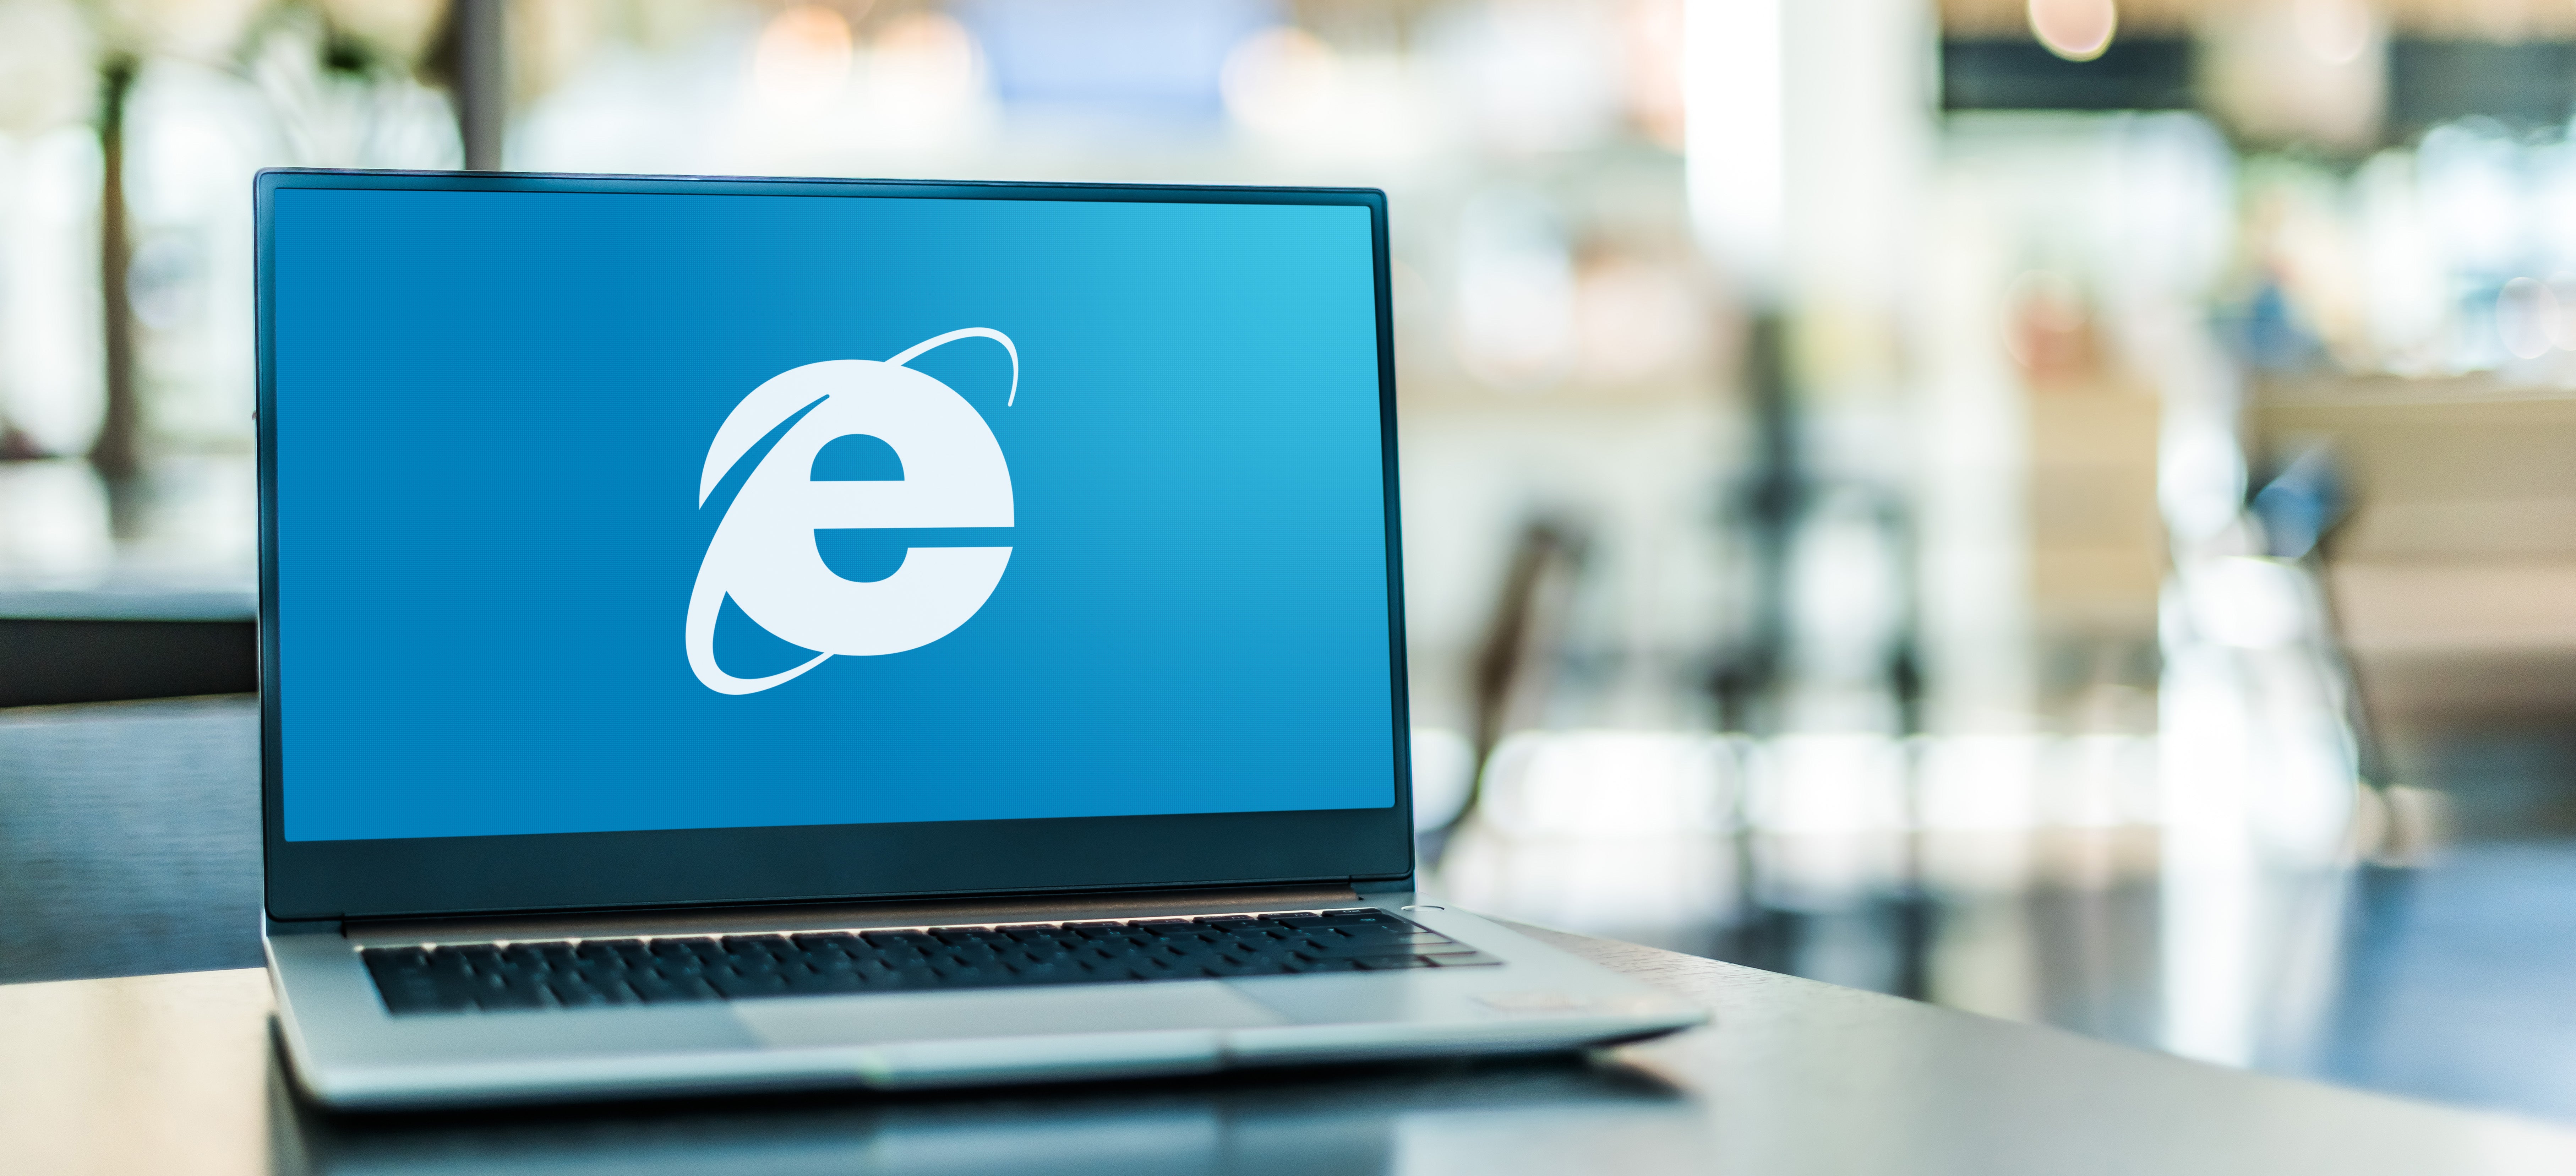 Internet Explorer Is Dead -- It's the End of an Era